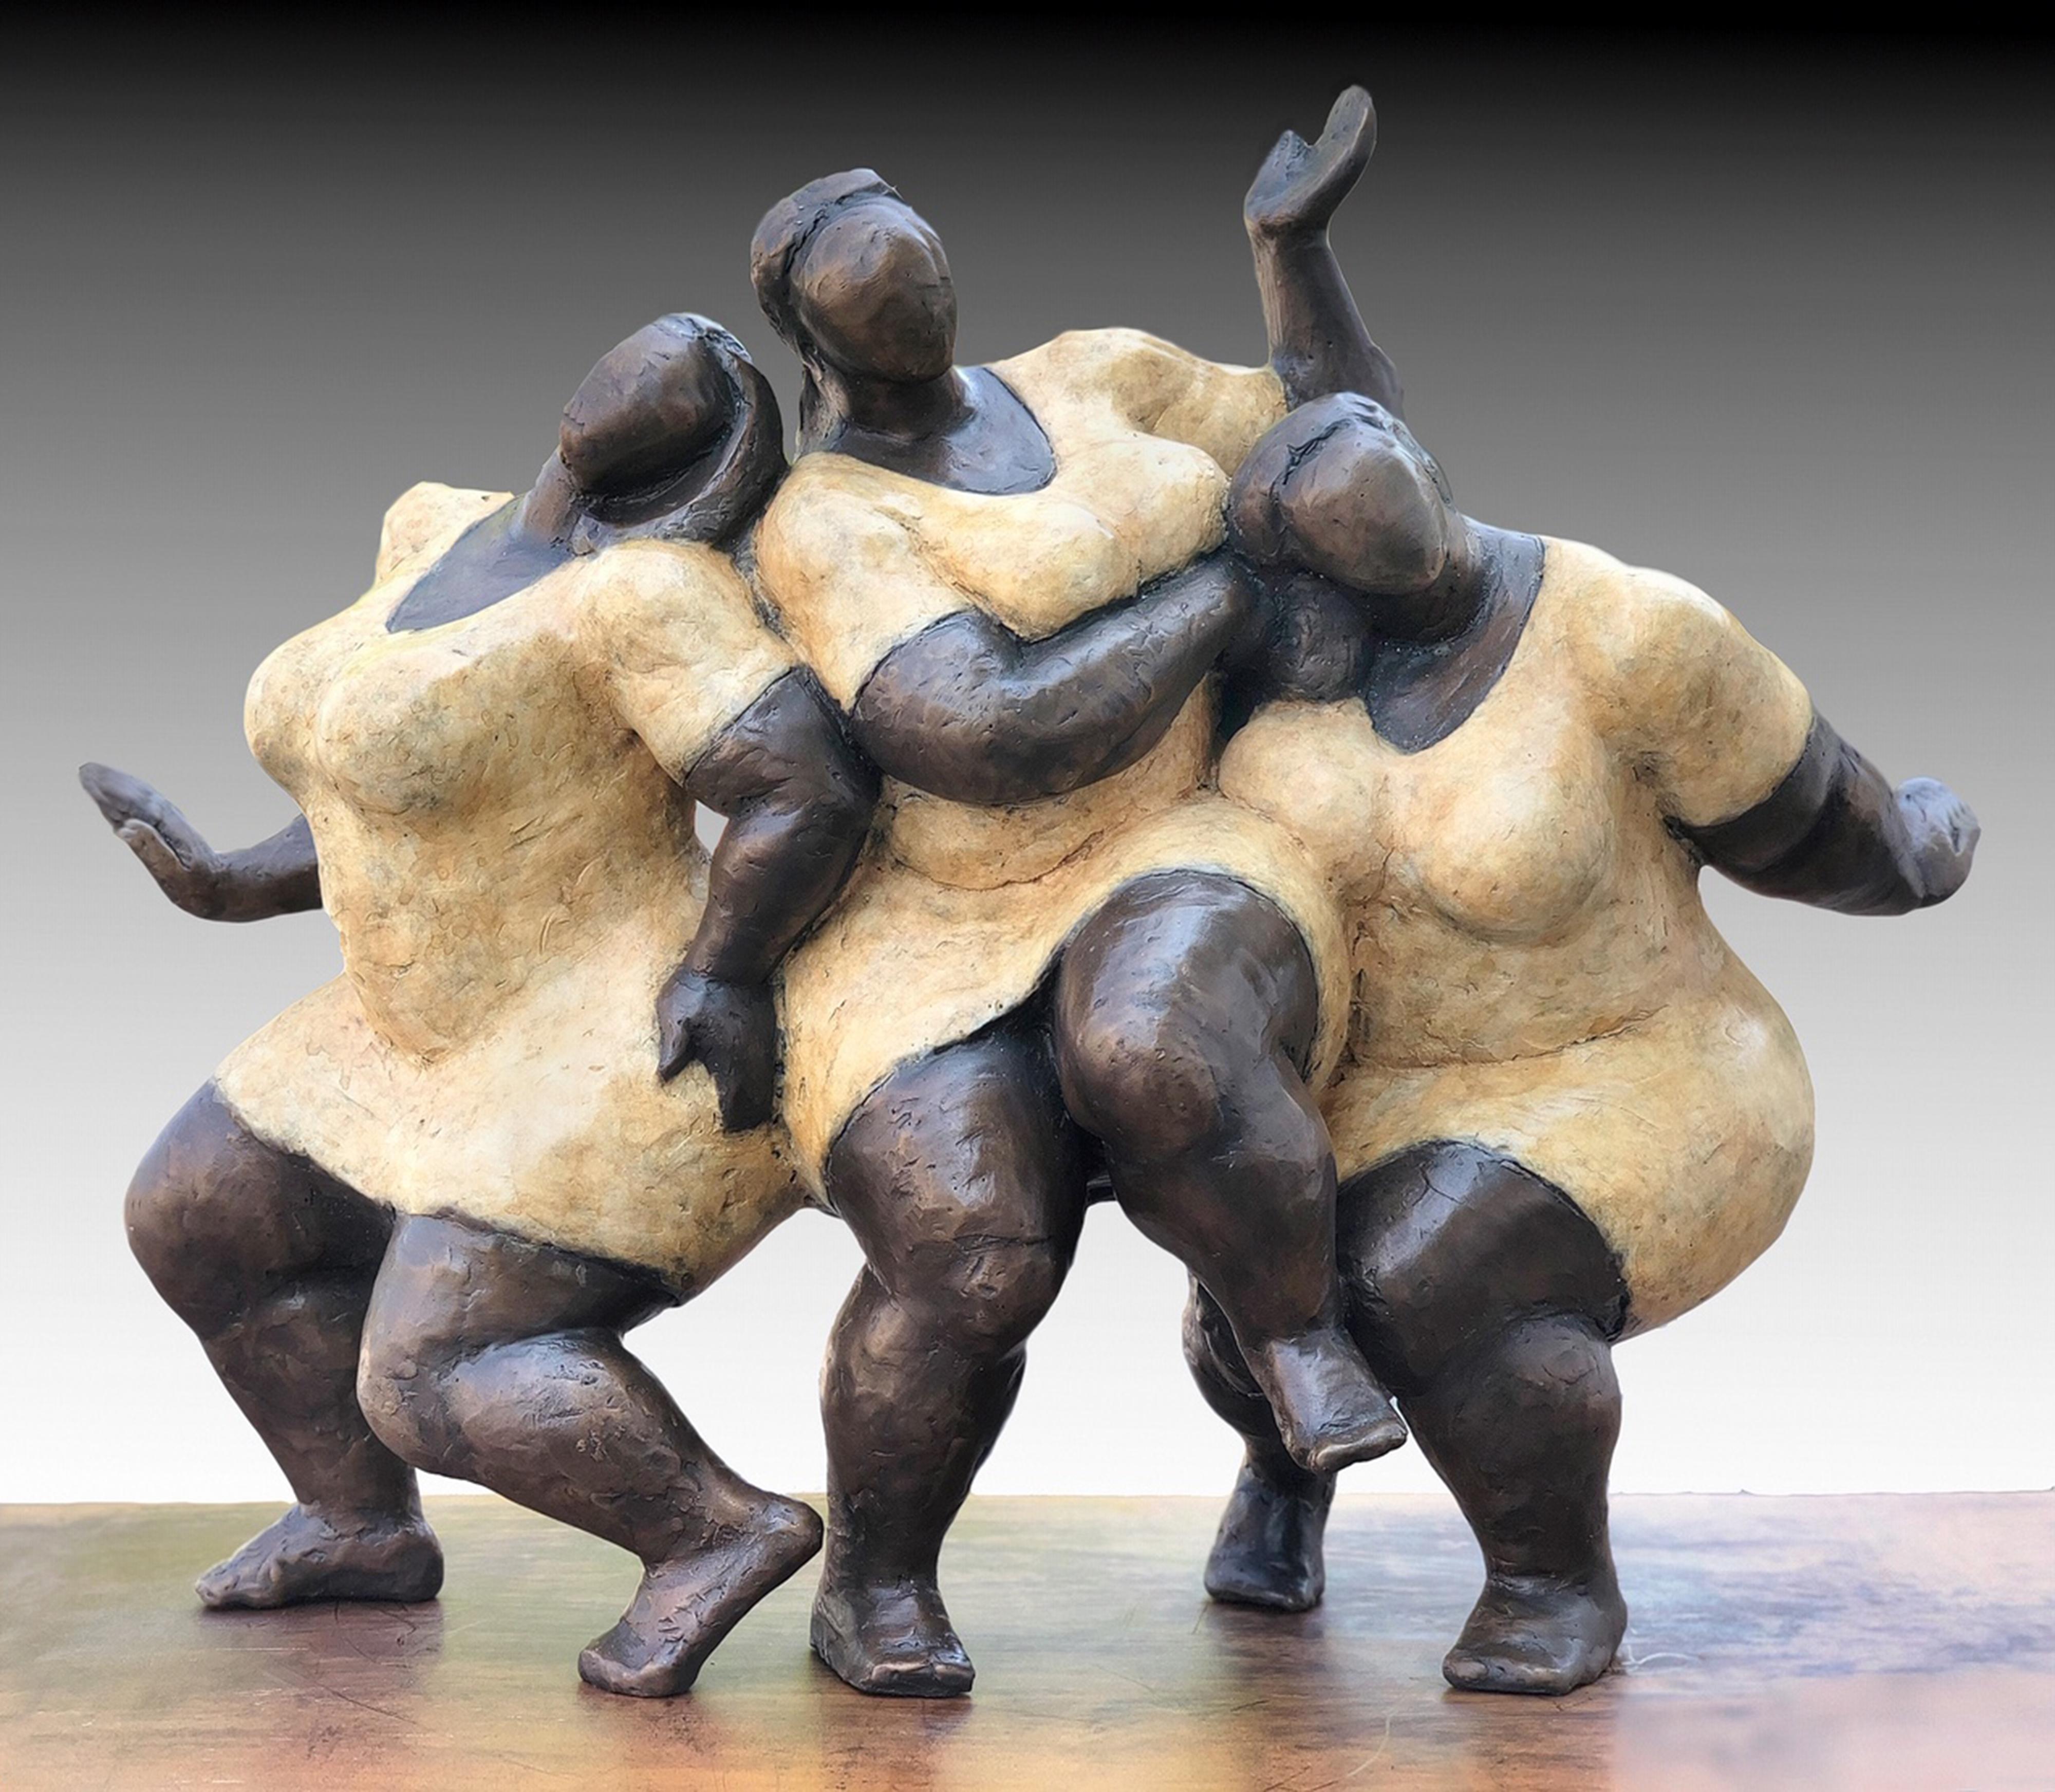 Nnamdi Okonkwo Figurative Sculpture - 'Joy' Cast Bronze Sculpture with Patina and Lacquer Finish